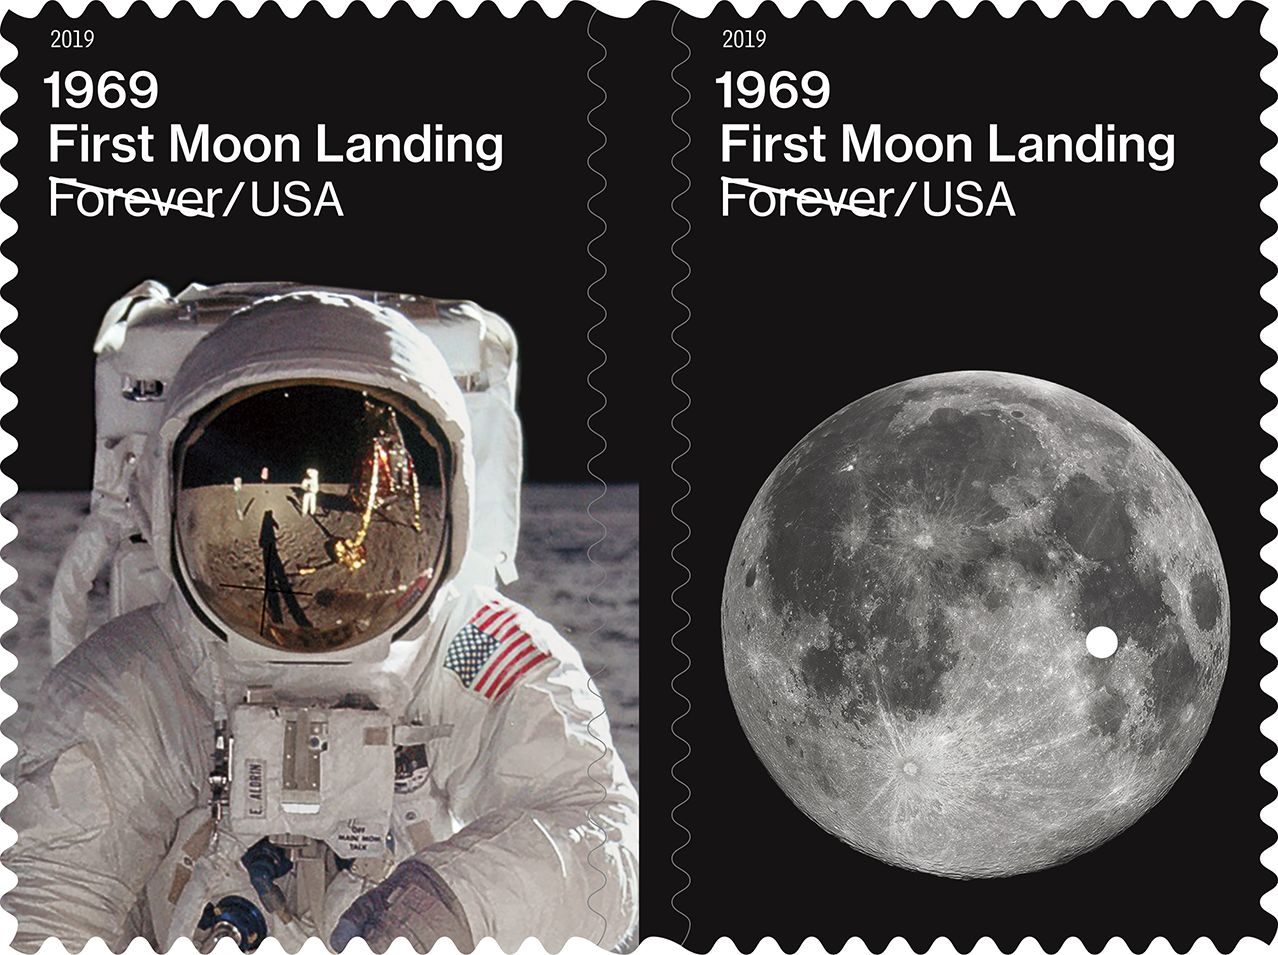 50th anniversary of moonlanding stamps